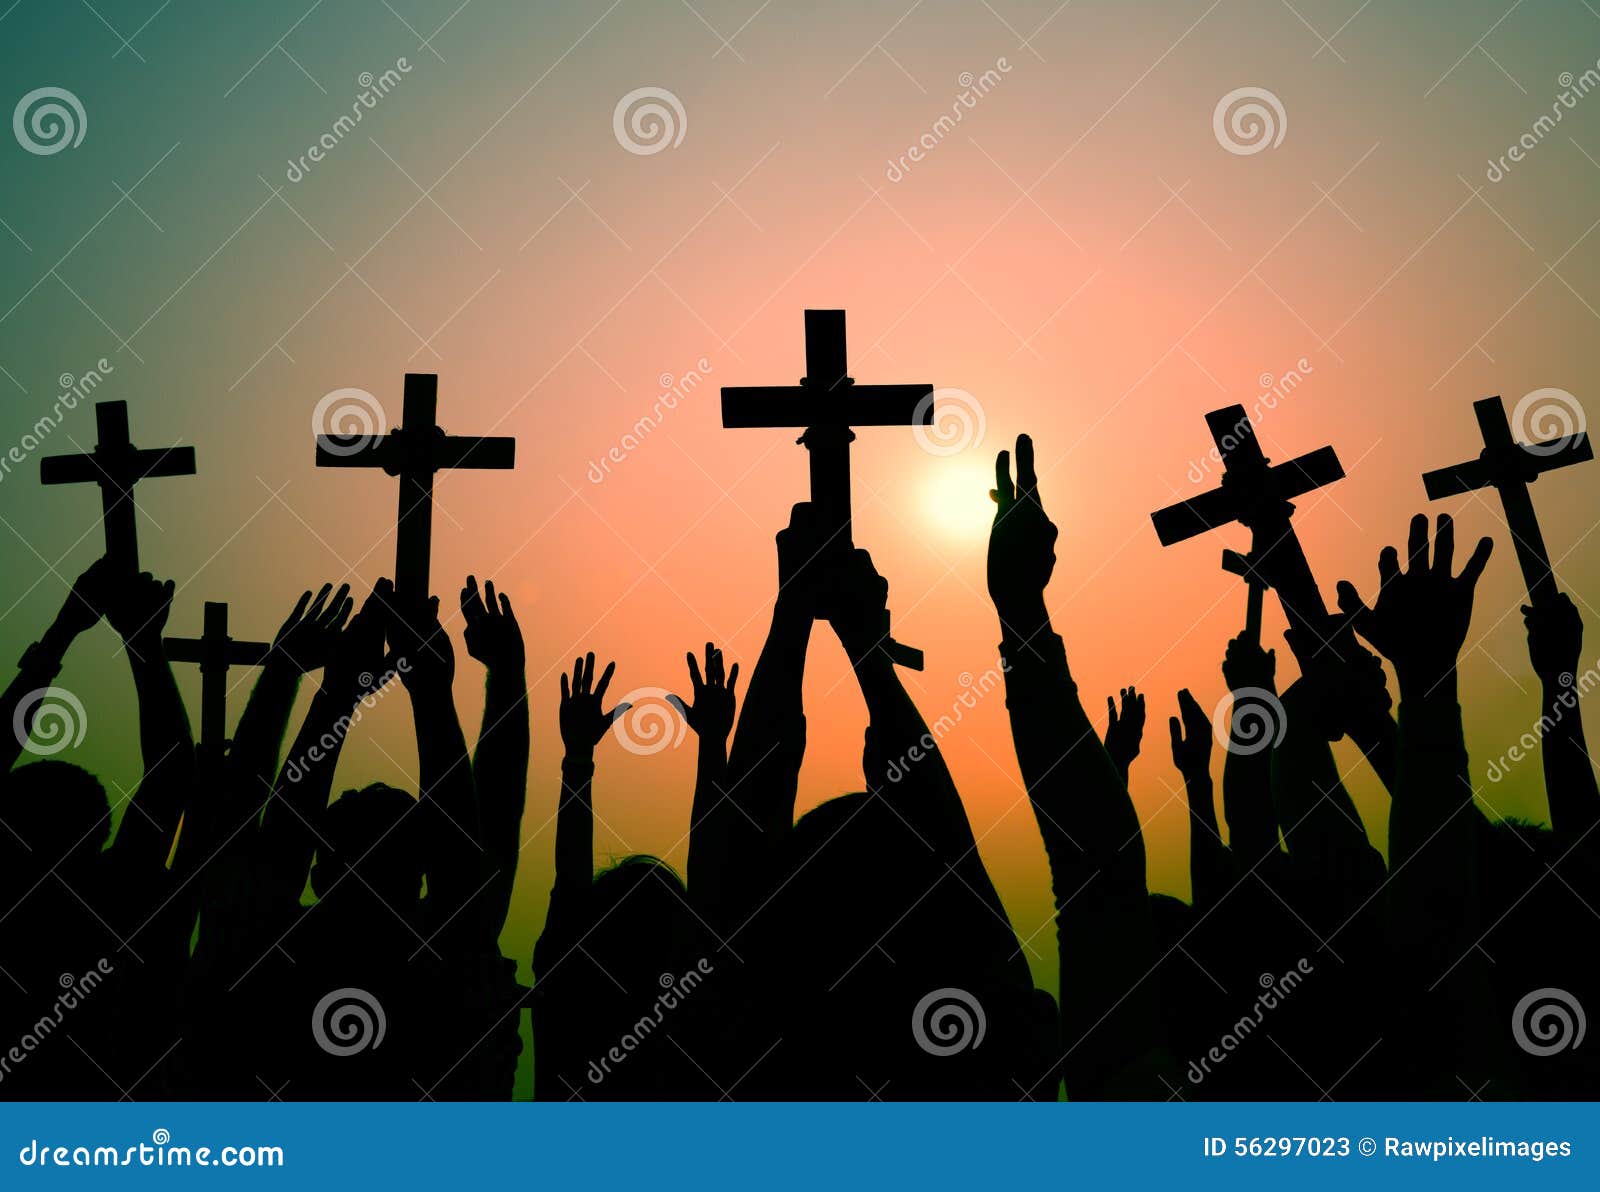 hands holding cross christianity religion faith concept